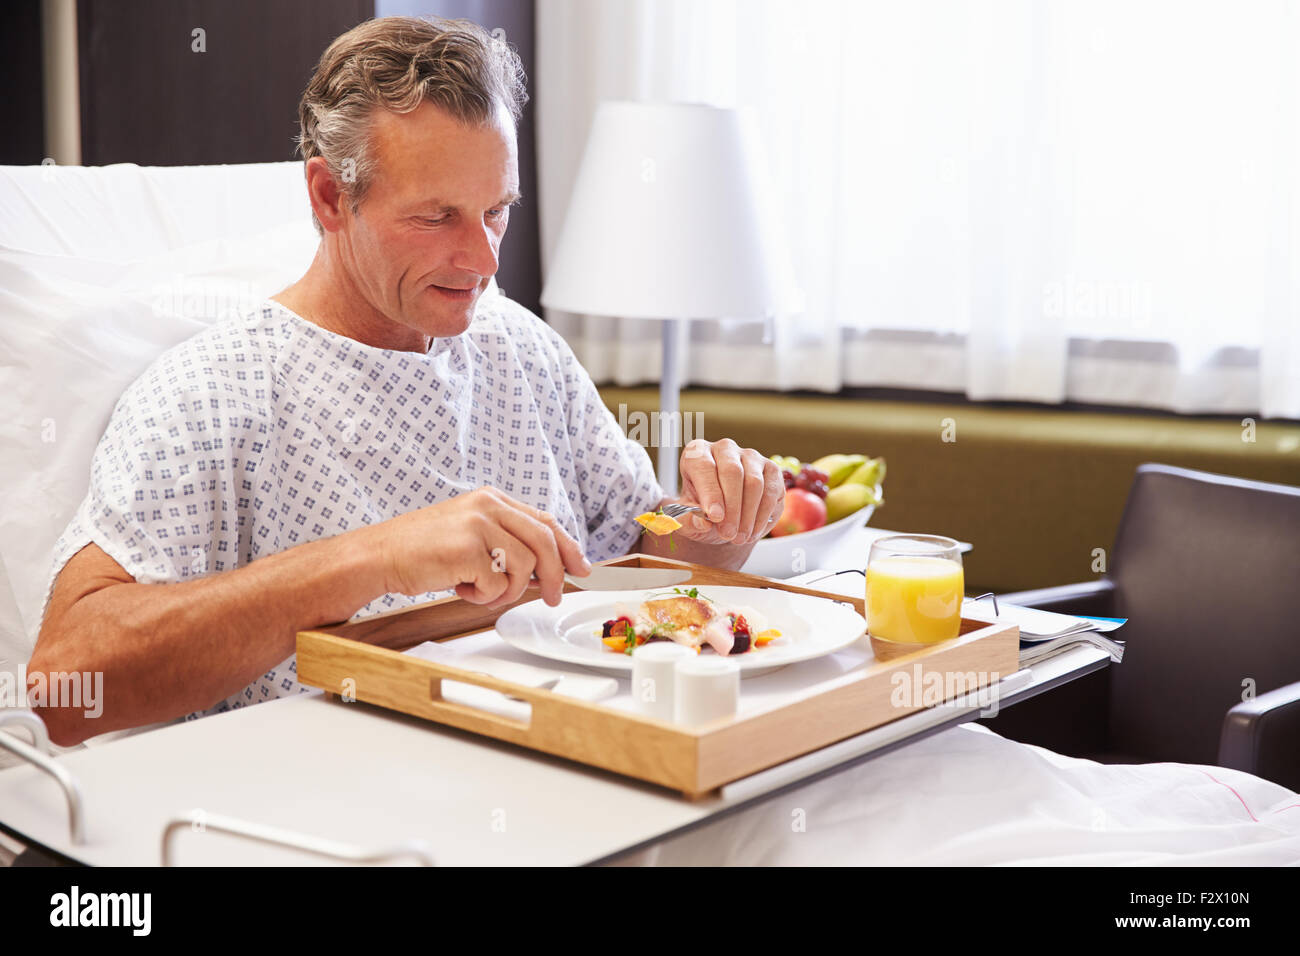 Male Patient In Hospital Bed Eating Meal à partir du bac Banque D'Images